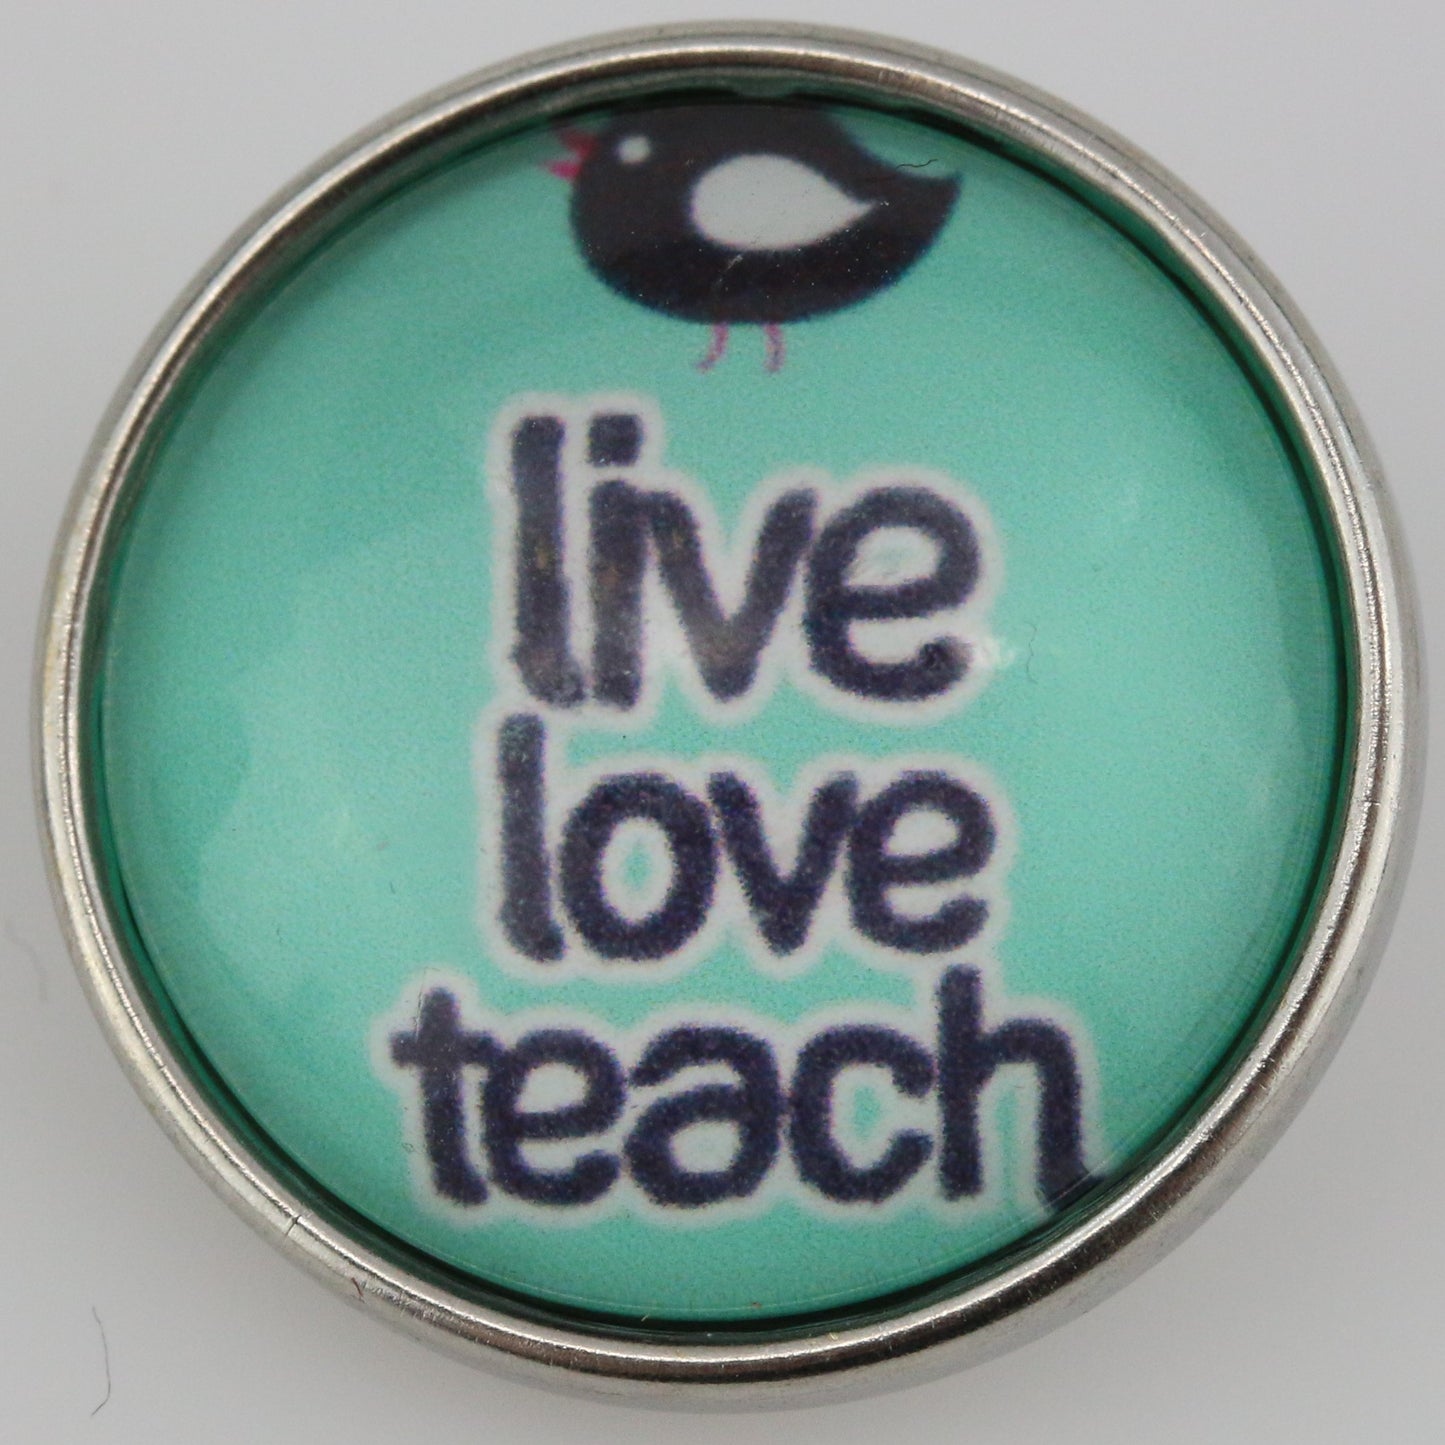 53106 - Snap - 20mm - "live, love, teach"